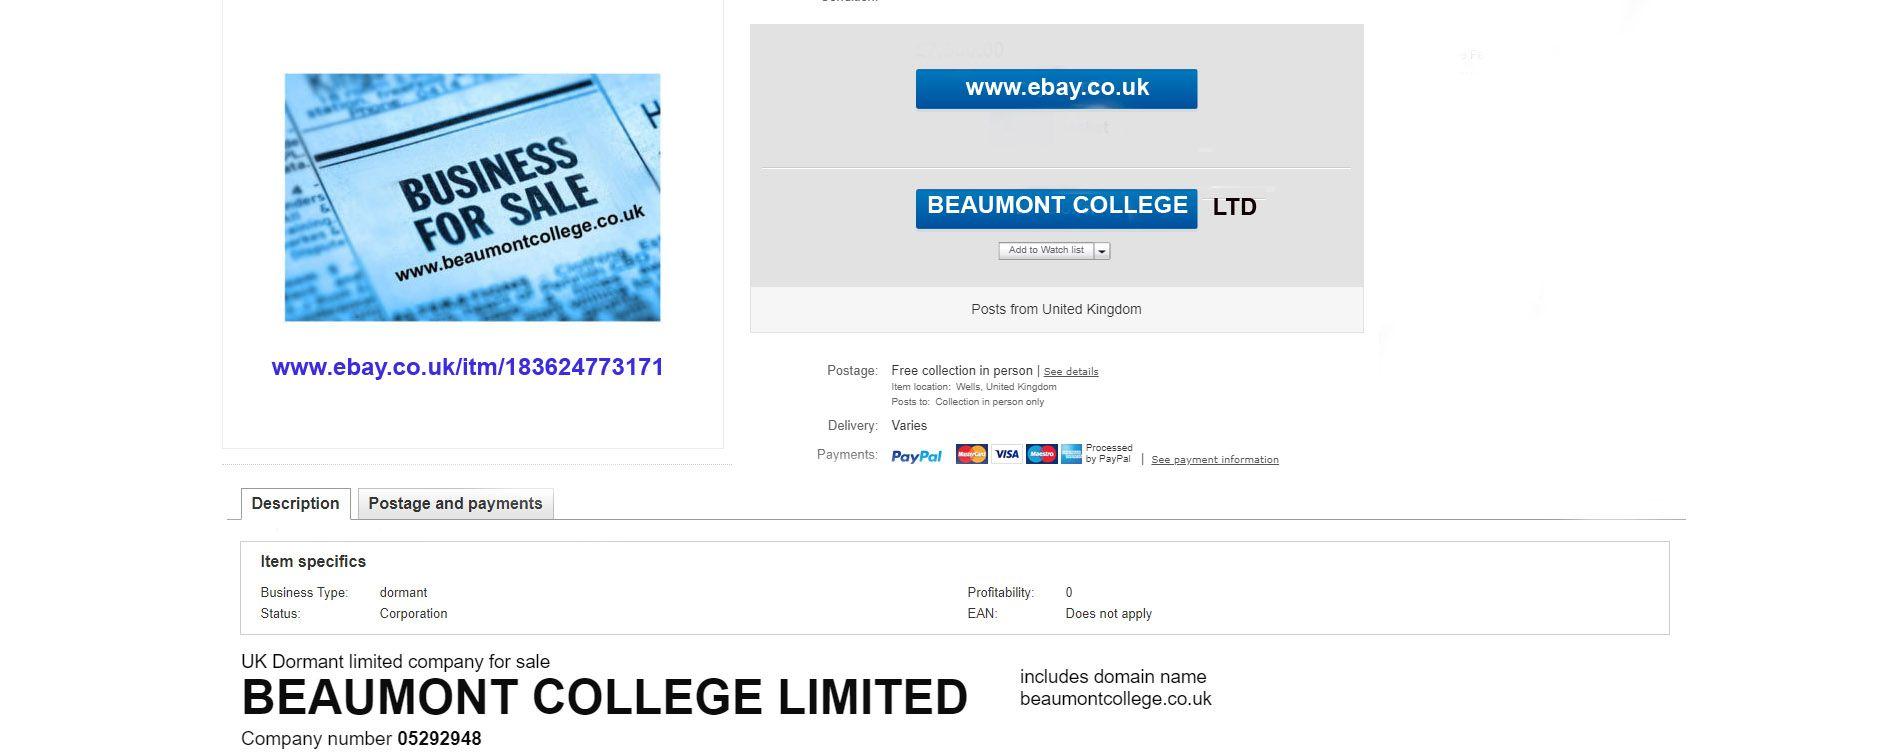 Beaumont College Logo - Beaumont College Ltd - FOR SALE